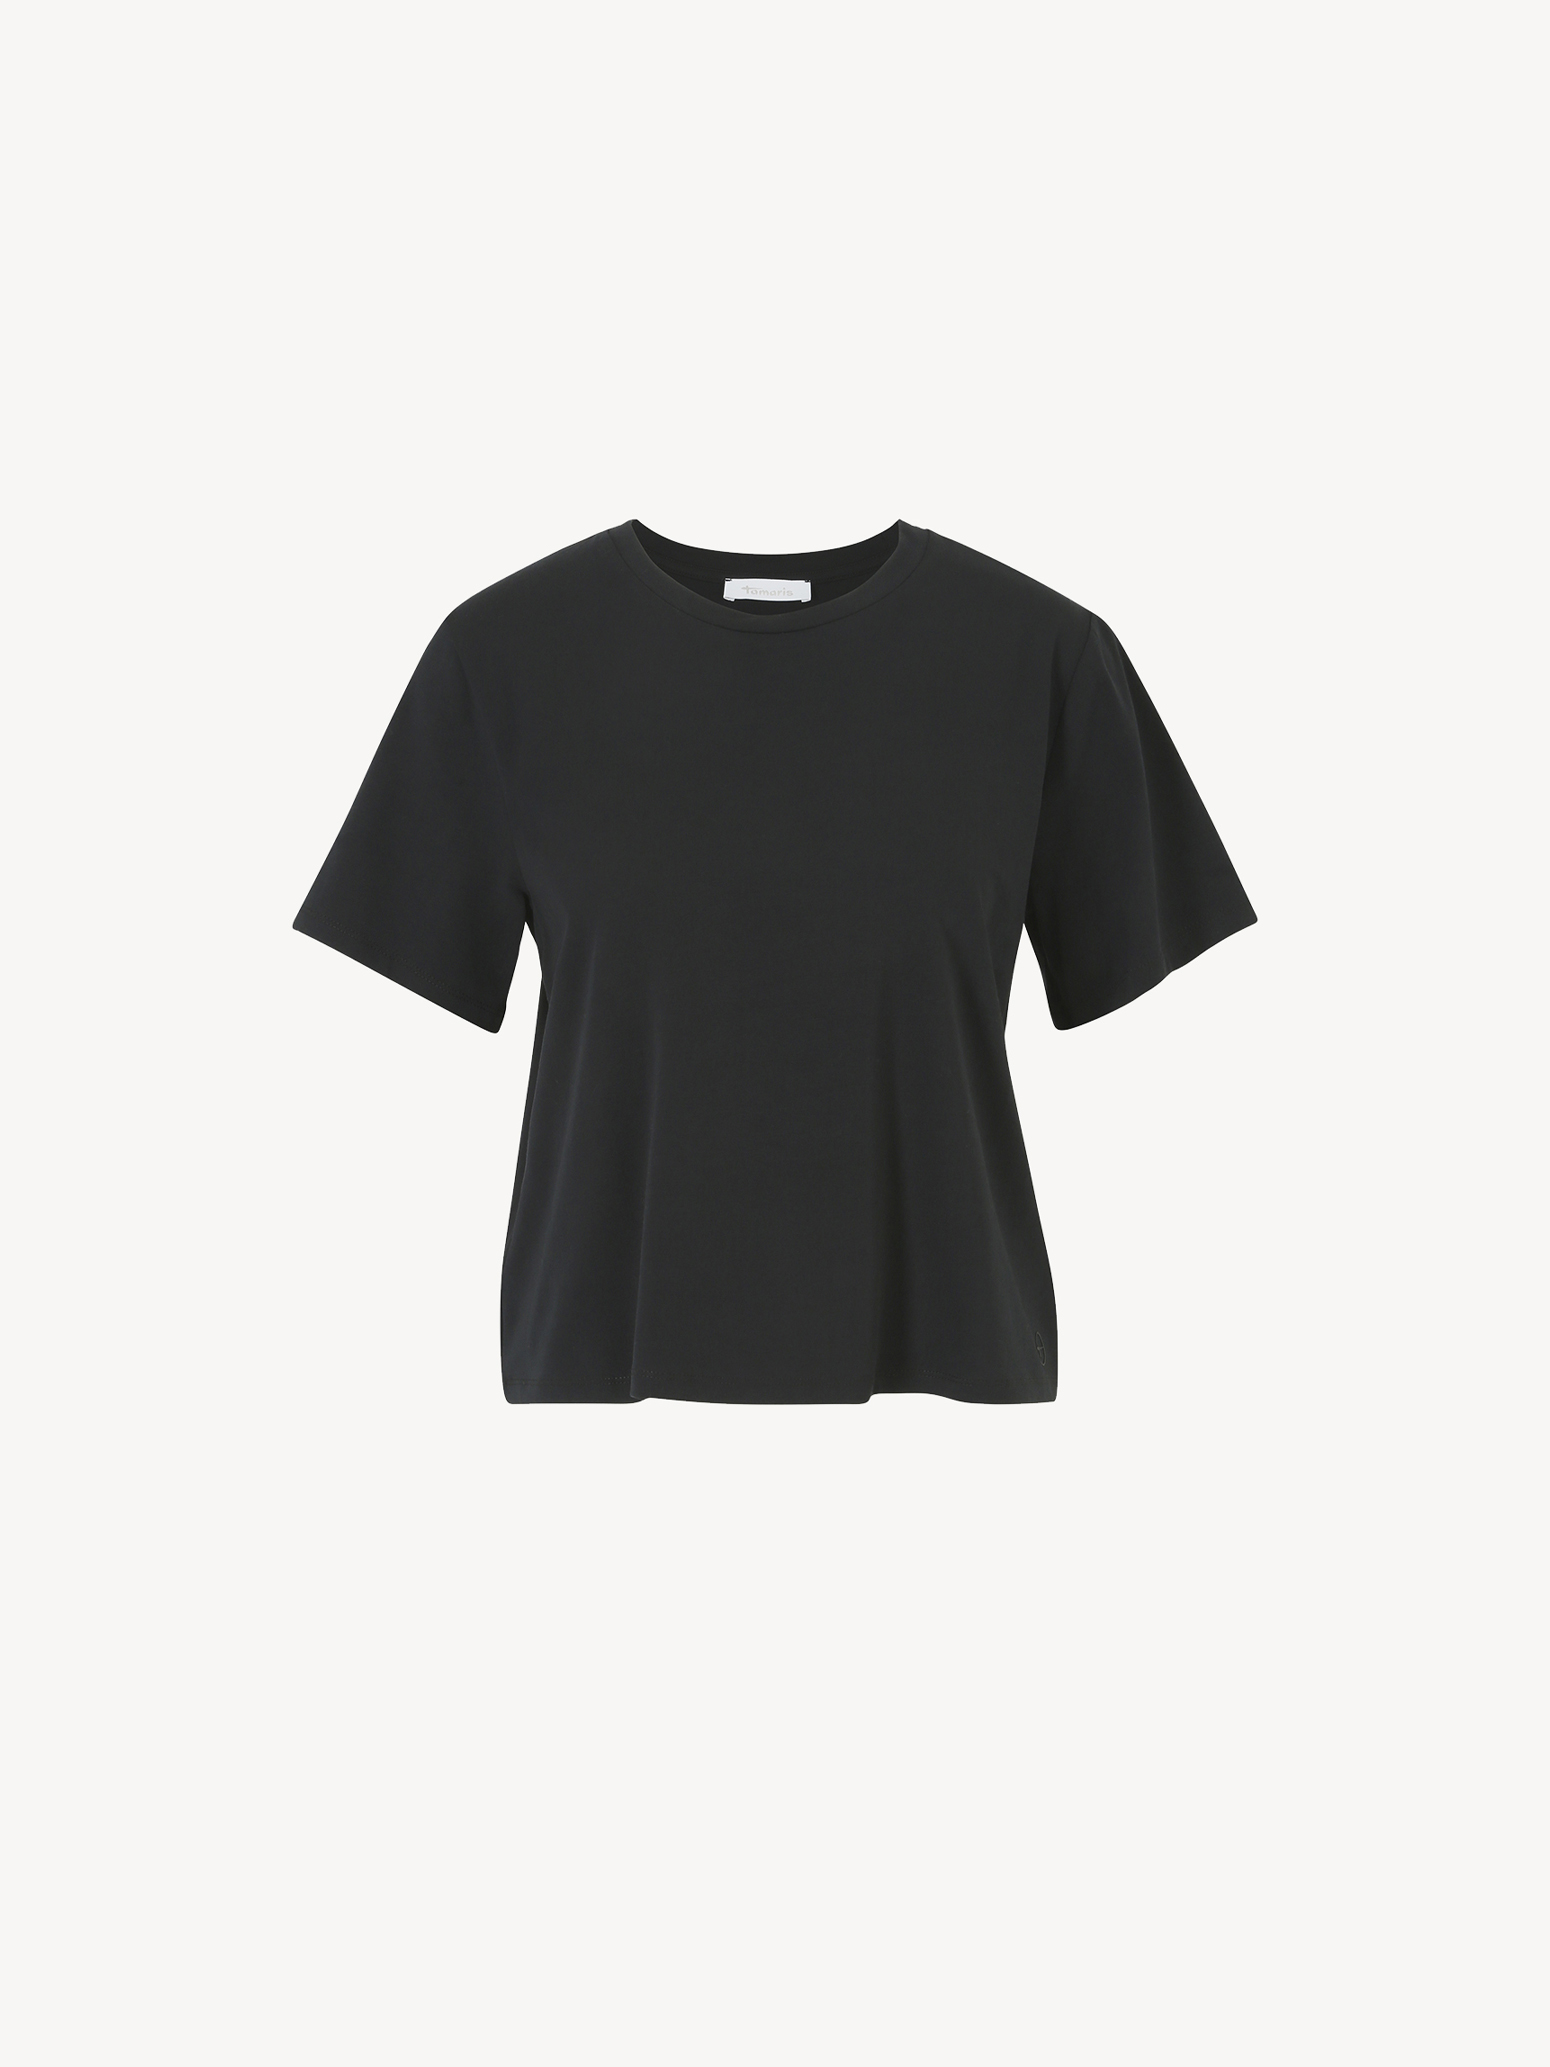 Oversized T-shirt TAW0118-80009: black Tamaris T-Shirts - online! Buy